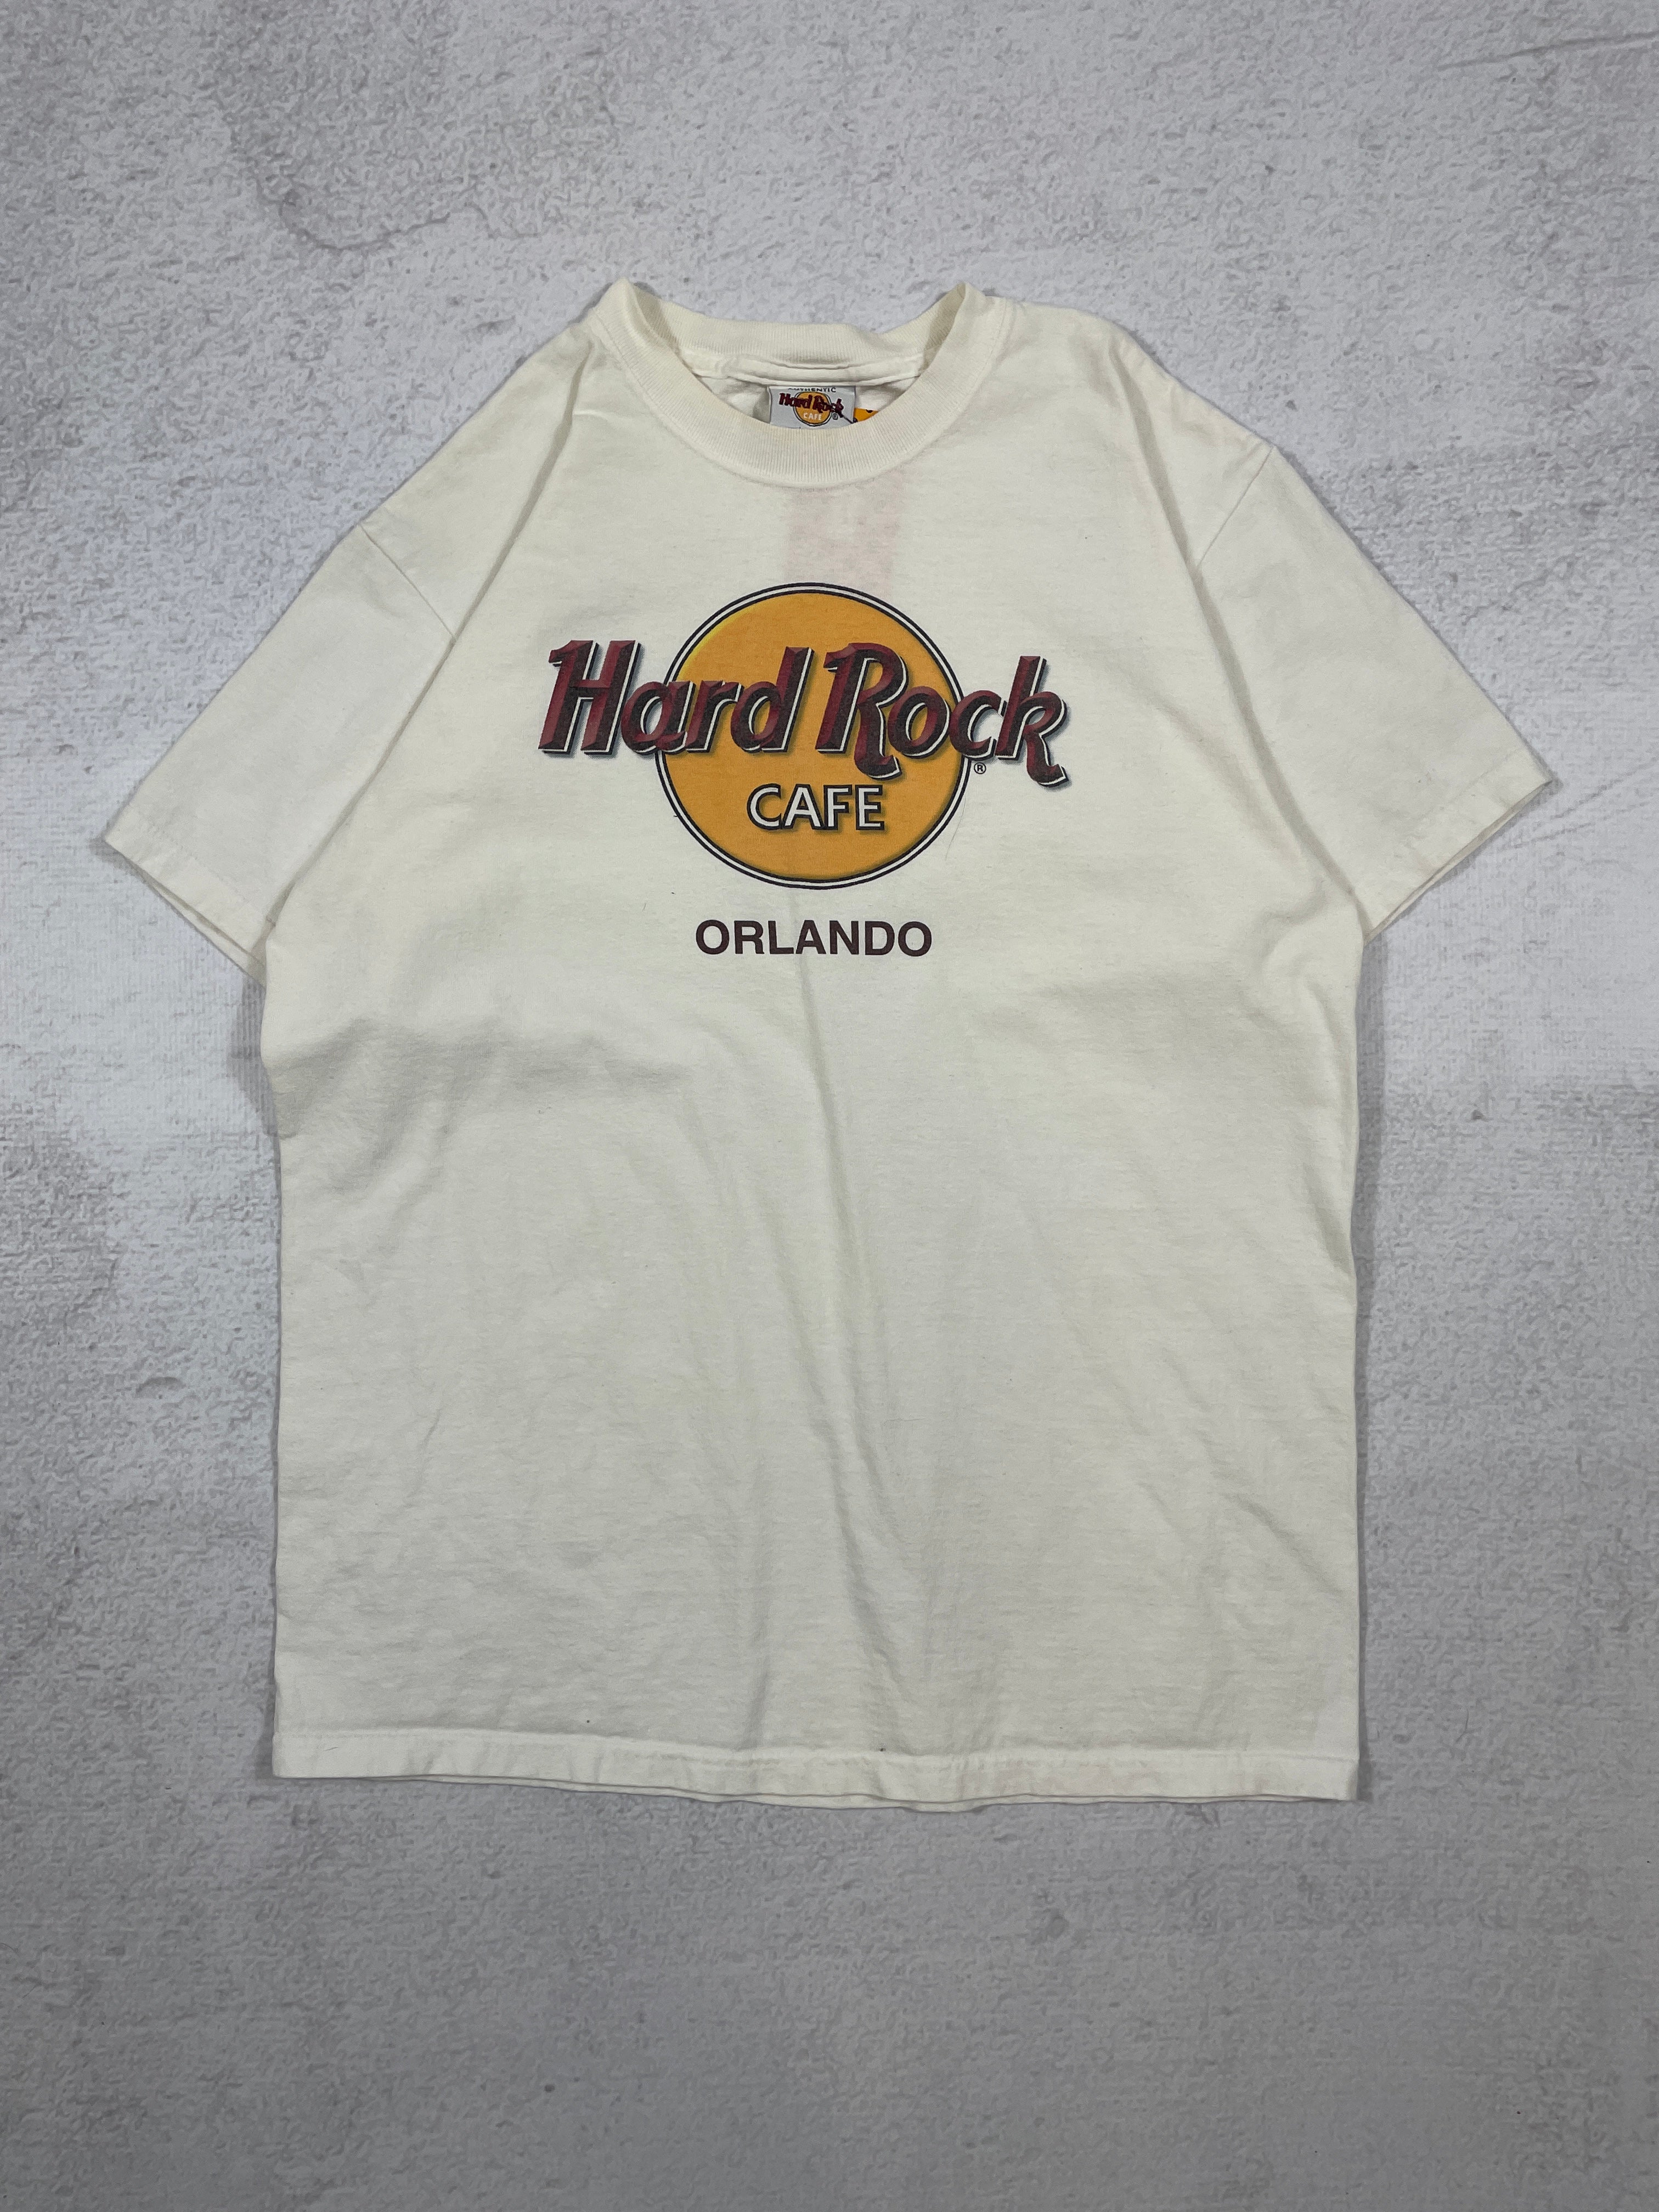 Vintage Hard Rock Cafe Orlando T-Shirt - Men's Medium